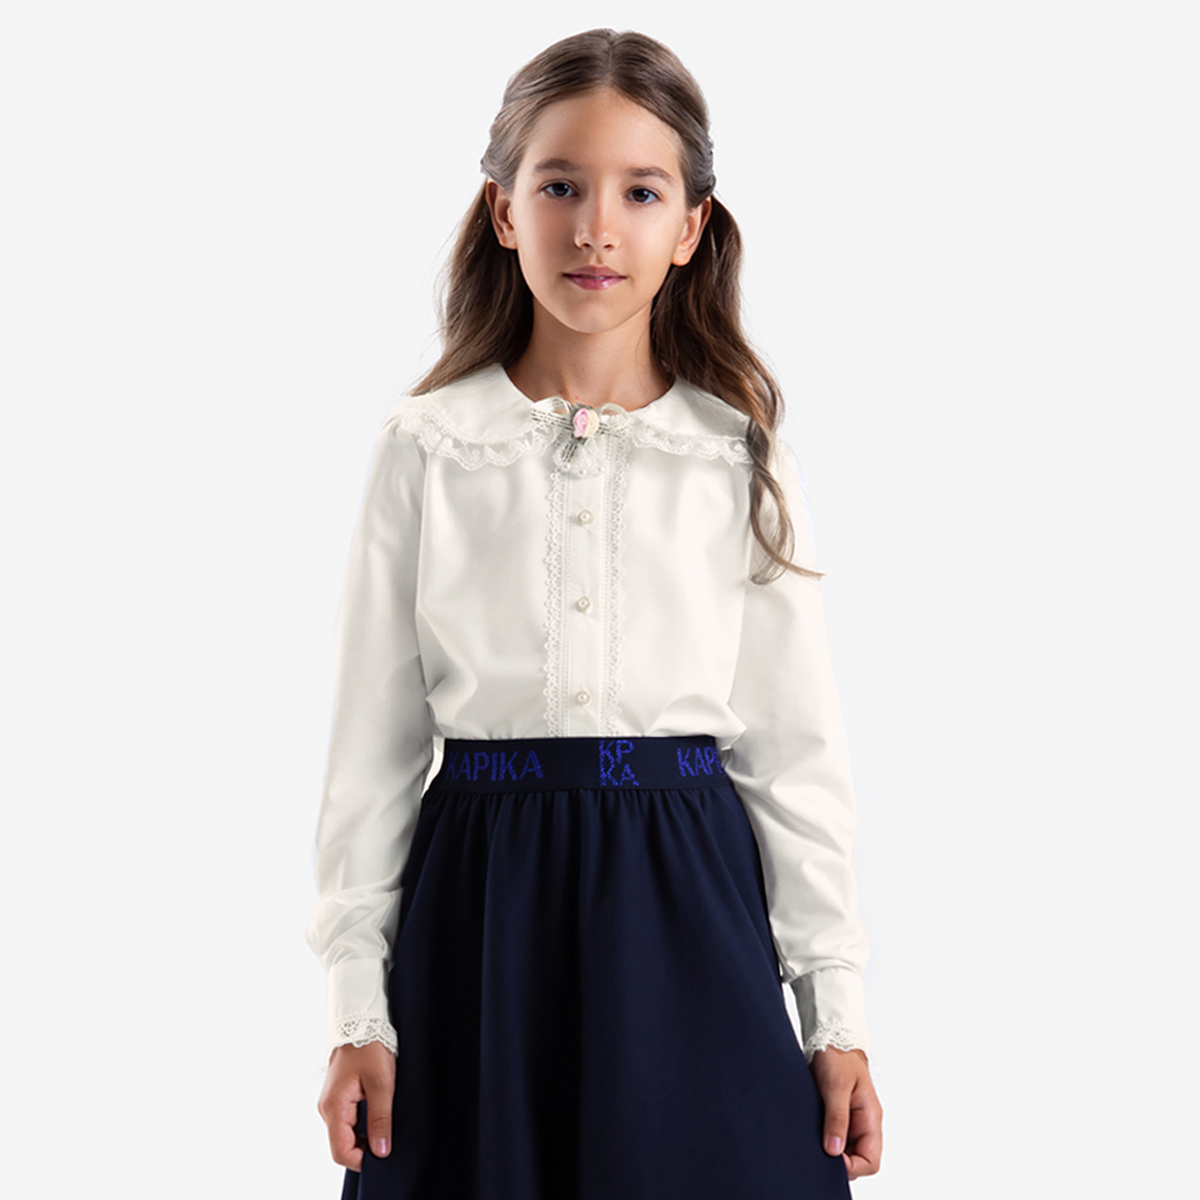 Блузка детская Kapika IJGCB01-02, цвет экрю, размер 164 блузка детская gulliver 12302gmc2203 белый размер 104